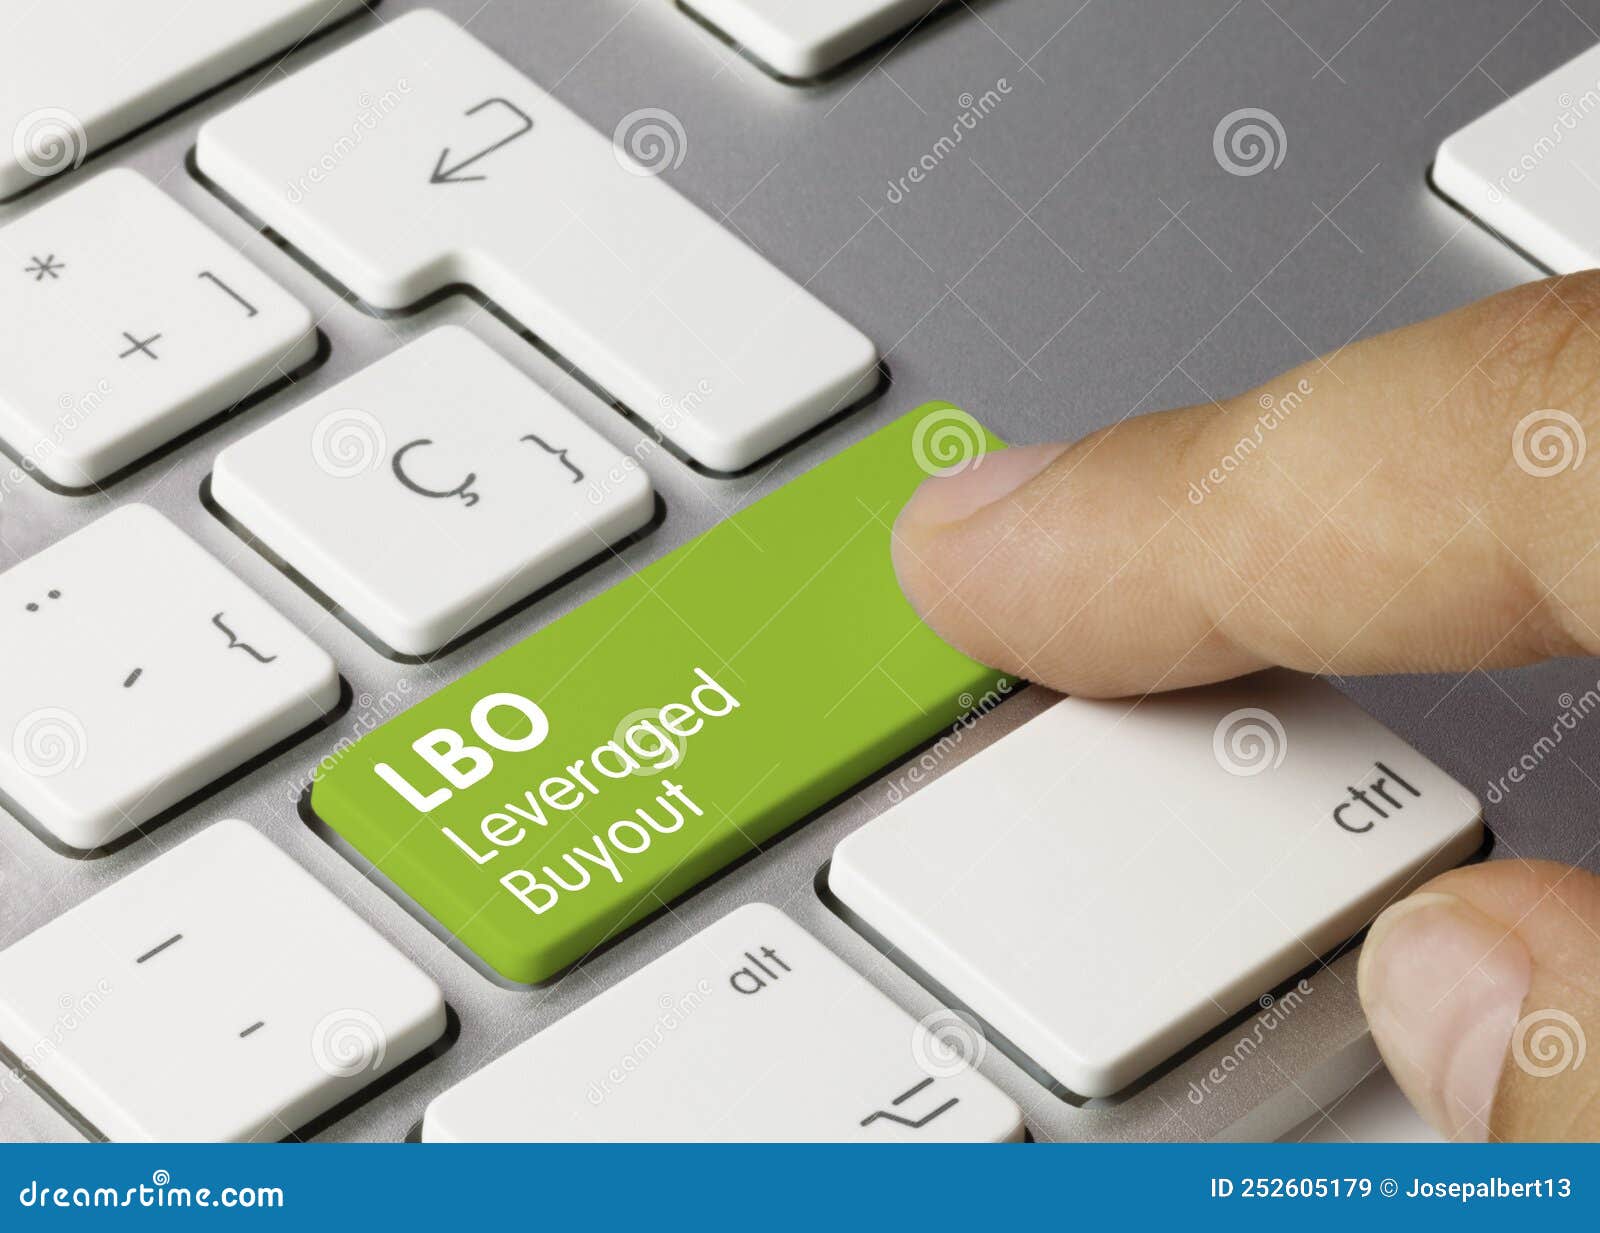 lbo leveraged buyout - inscription on green keyboard key